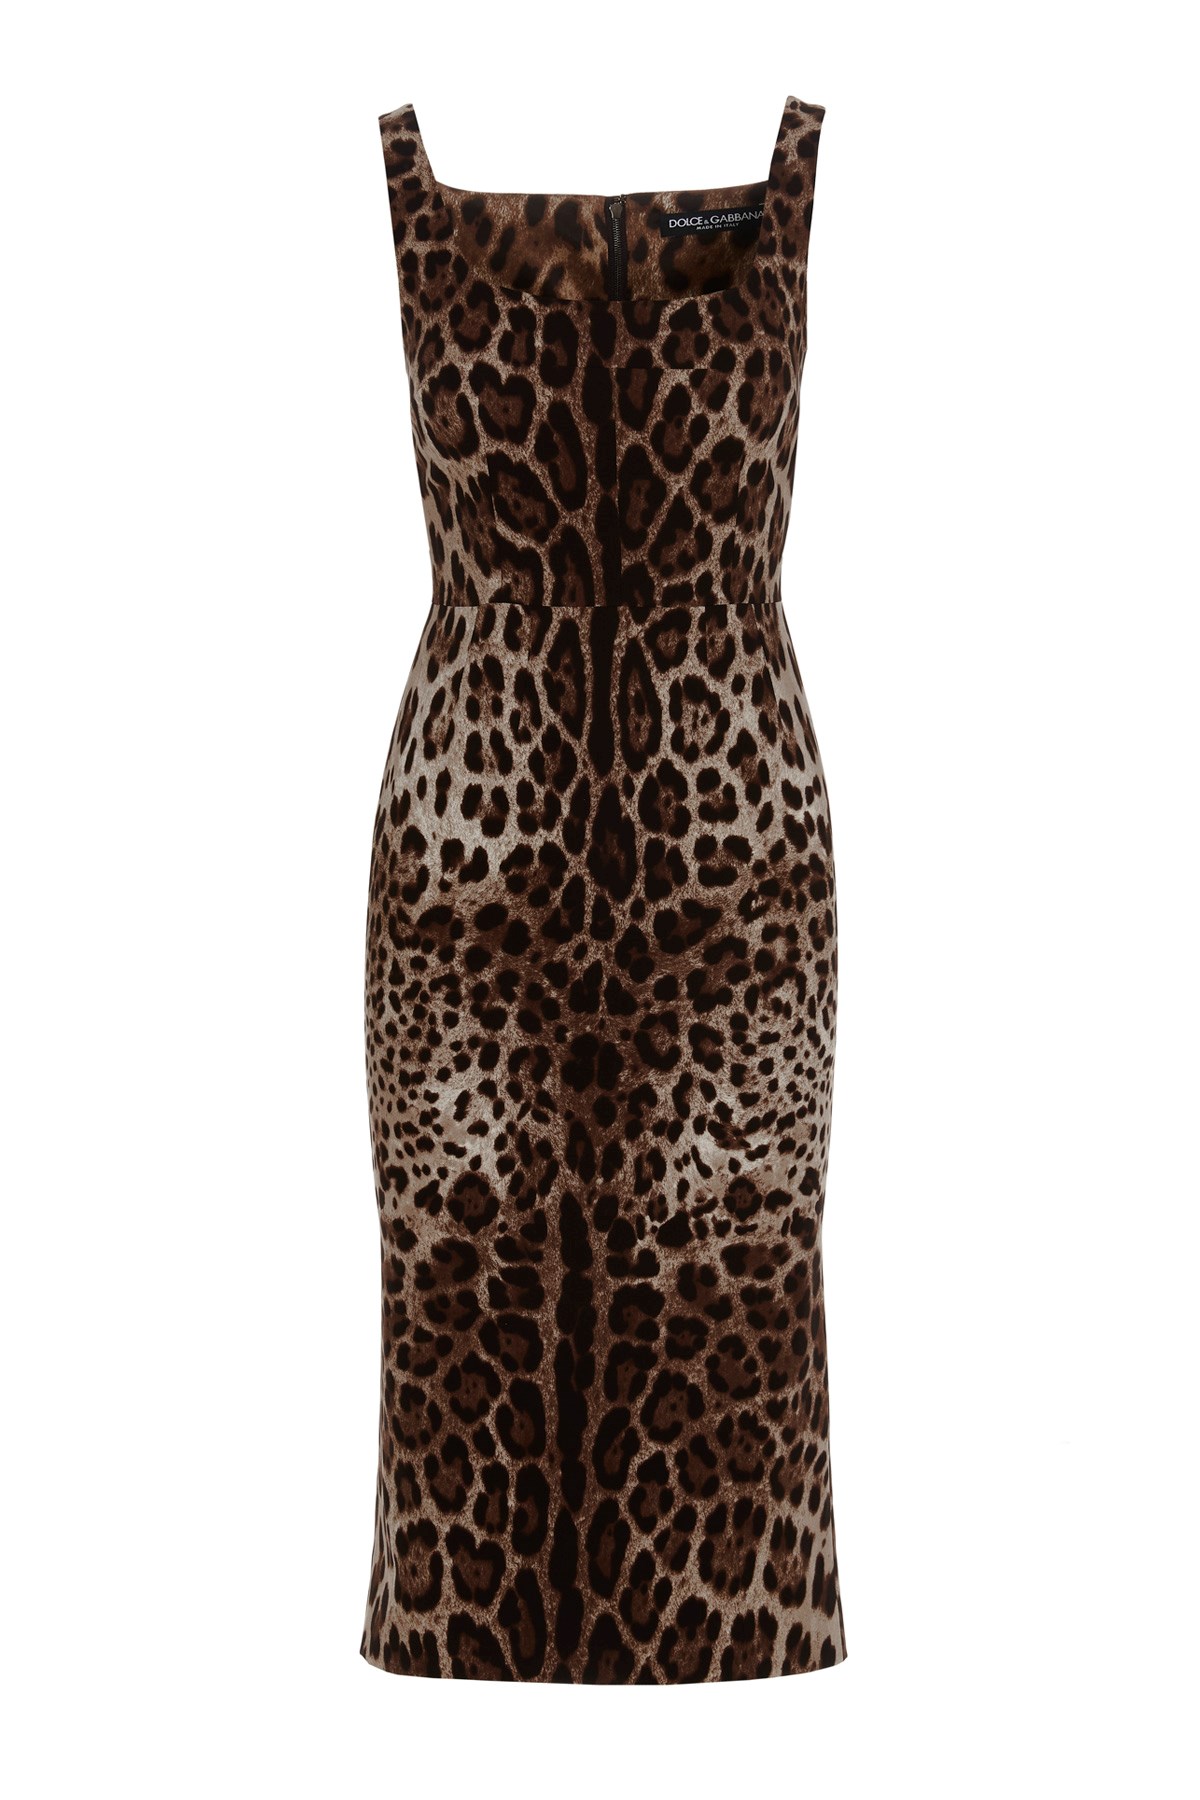 DOLCE & GABBANA Leopard Dress